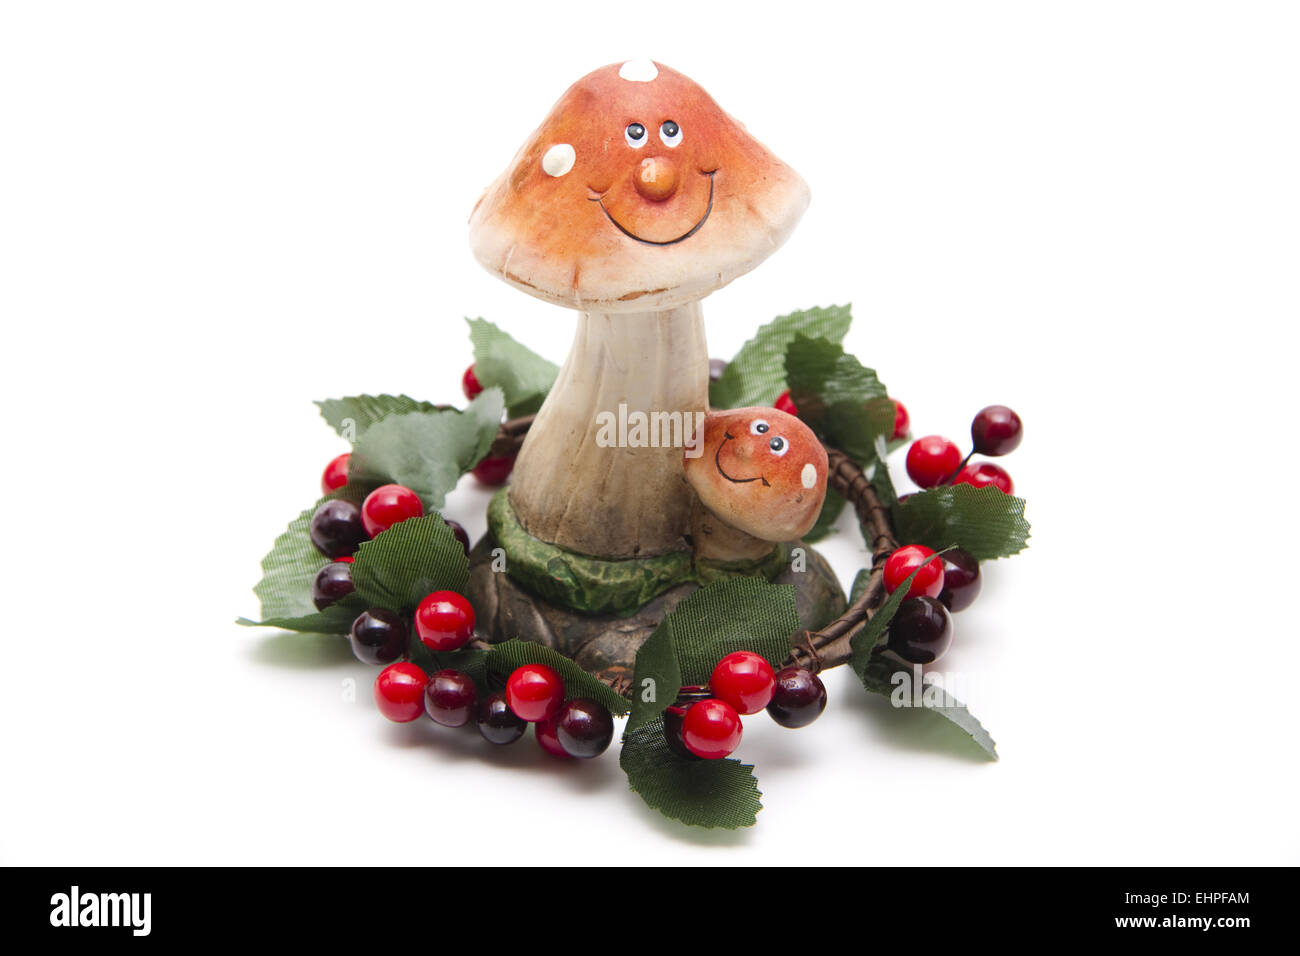 Mushroom figure with berry wreath Stock Photo